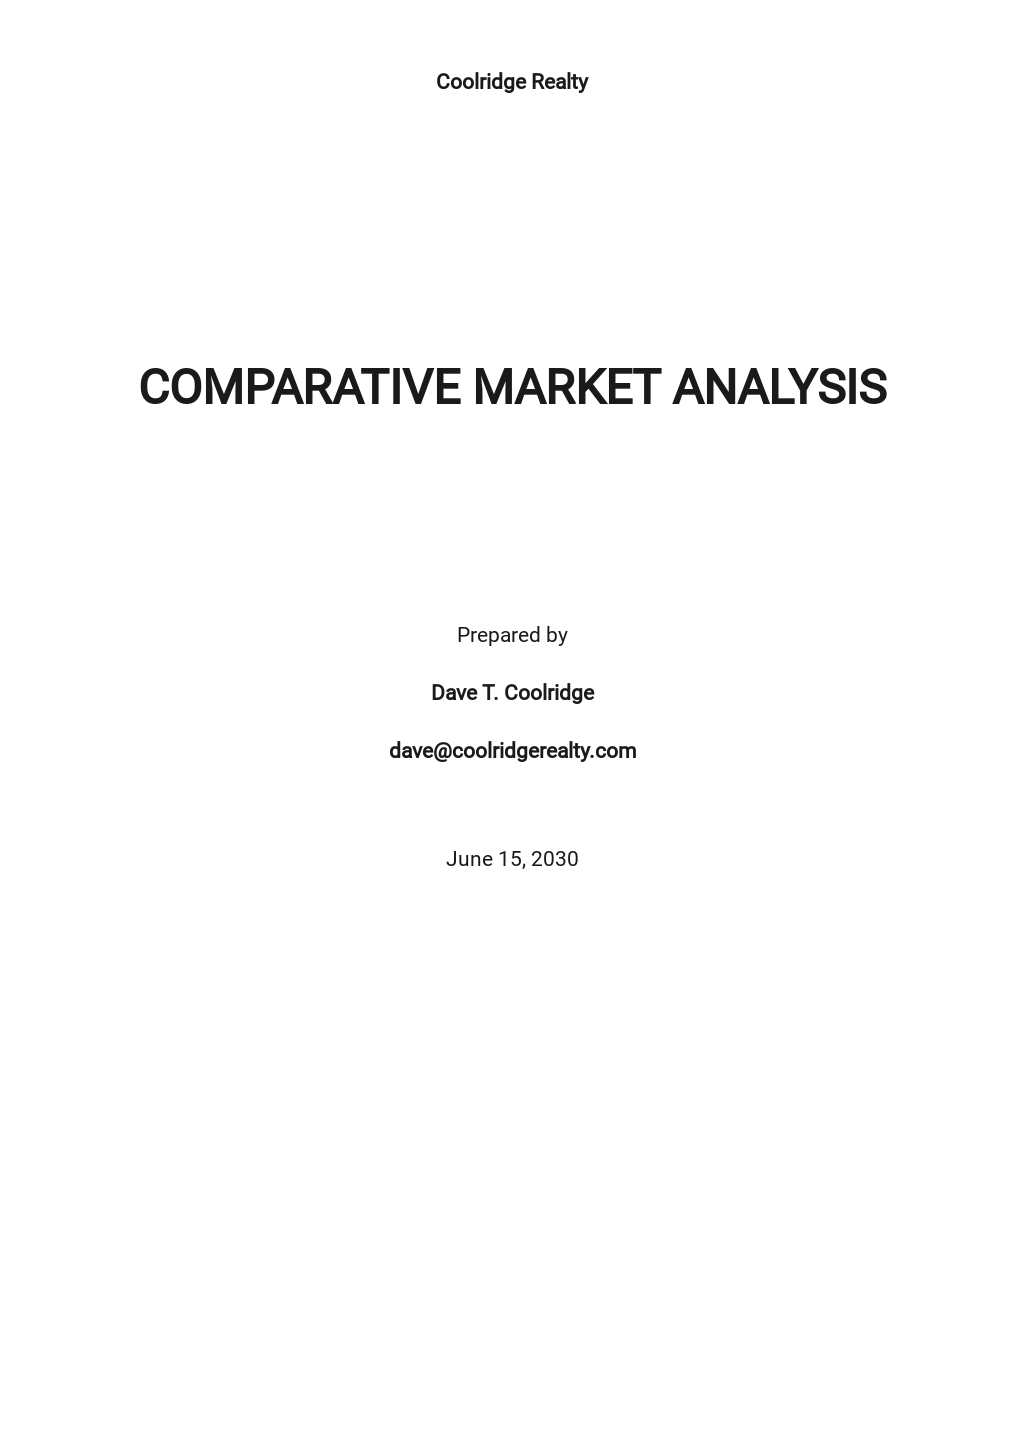 Comparative Market Analysis Template.jpe